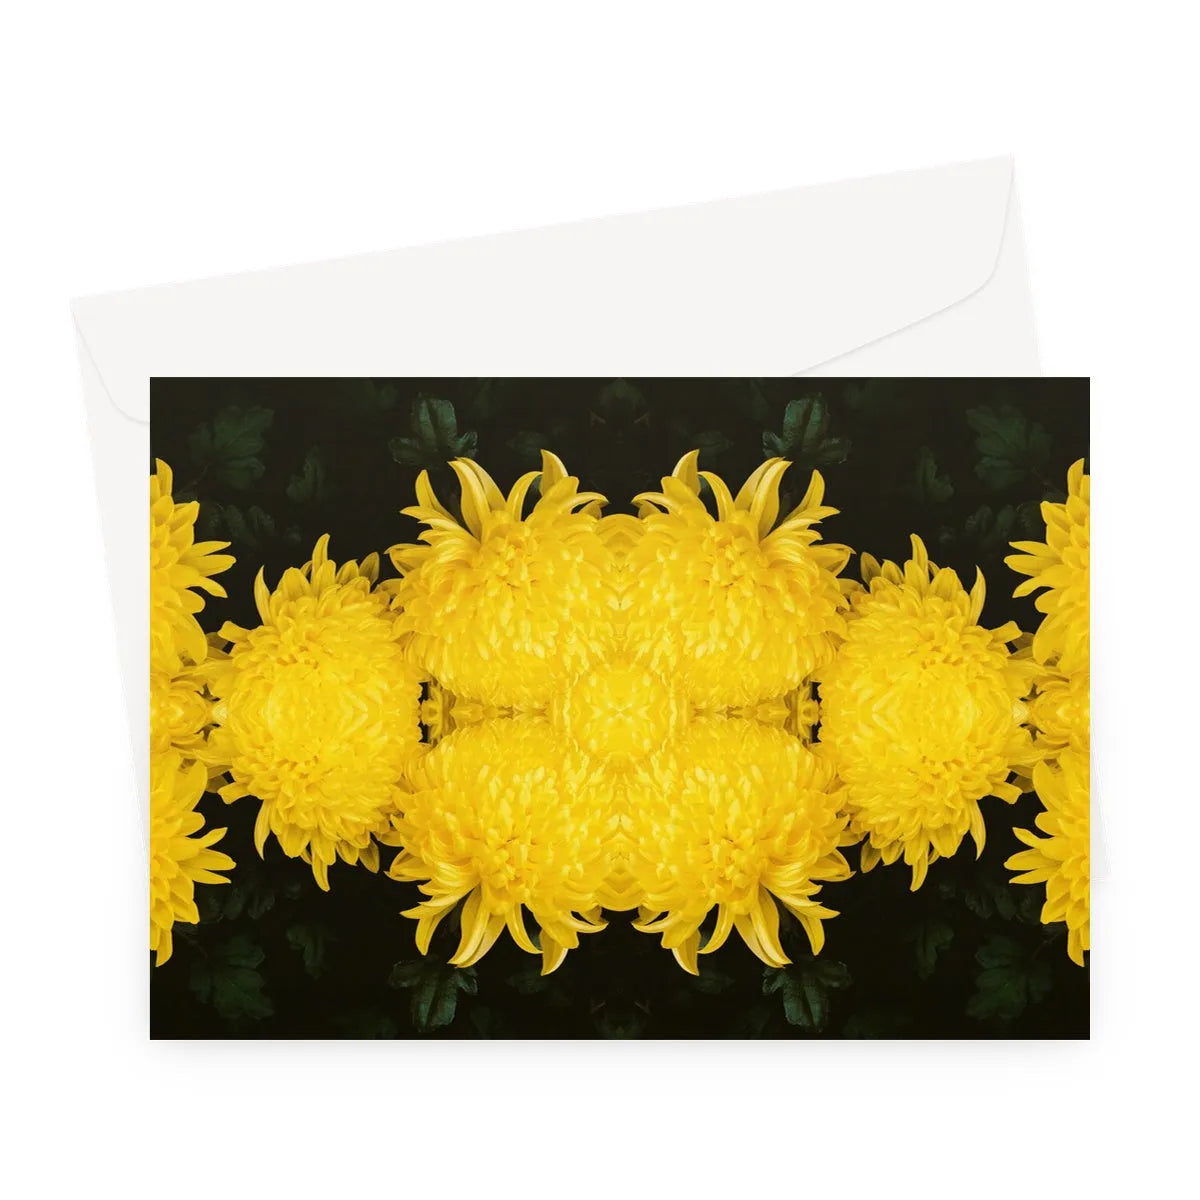 Tweedledee Greeting Card - A5 Landscape / 1 Card - Greeting & Note Cards - Aesthetic Art